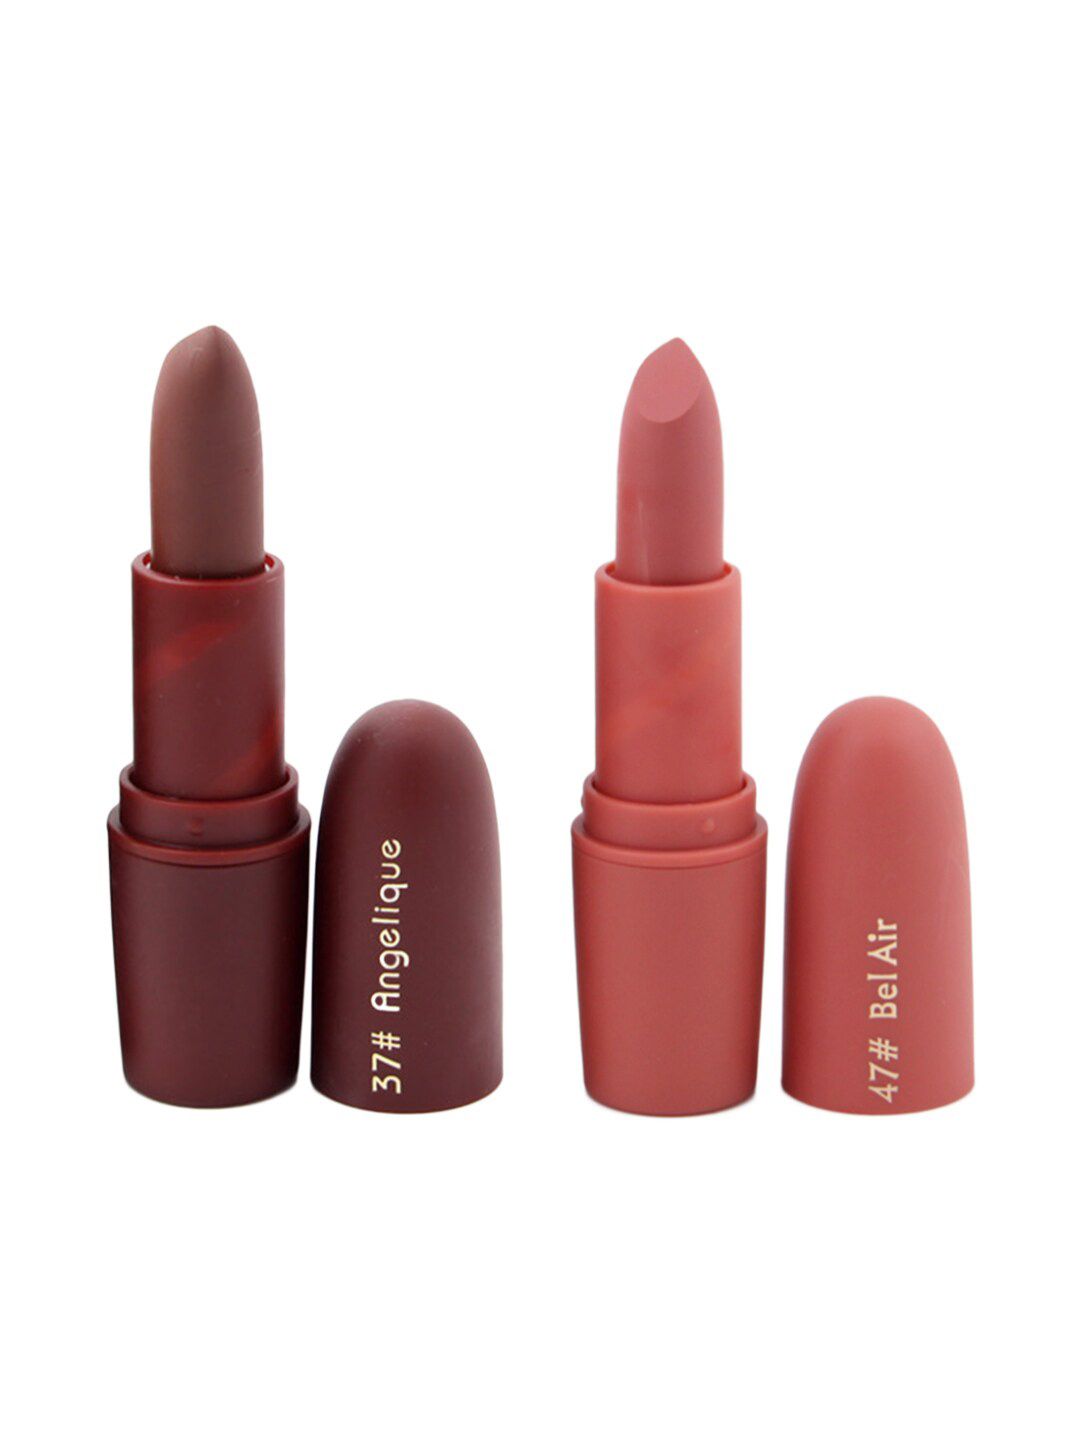 MISS ROSE Set of 2 Matte Creamy Lipsticks - Angelique 37 & Bel Air 47 Price in India